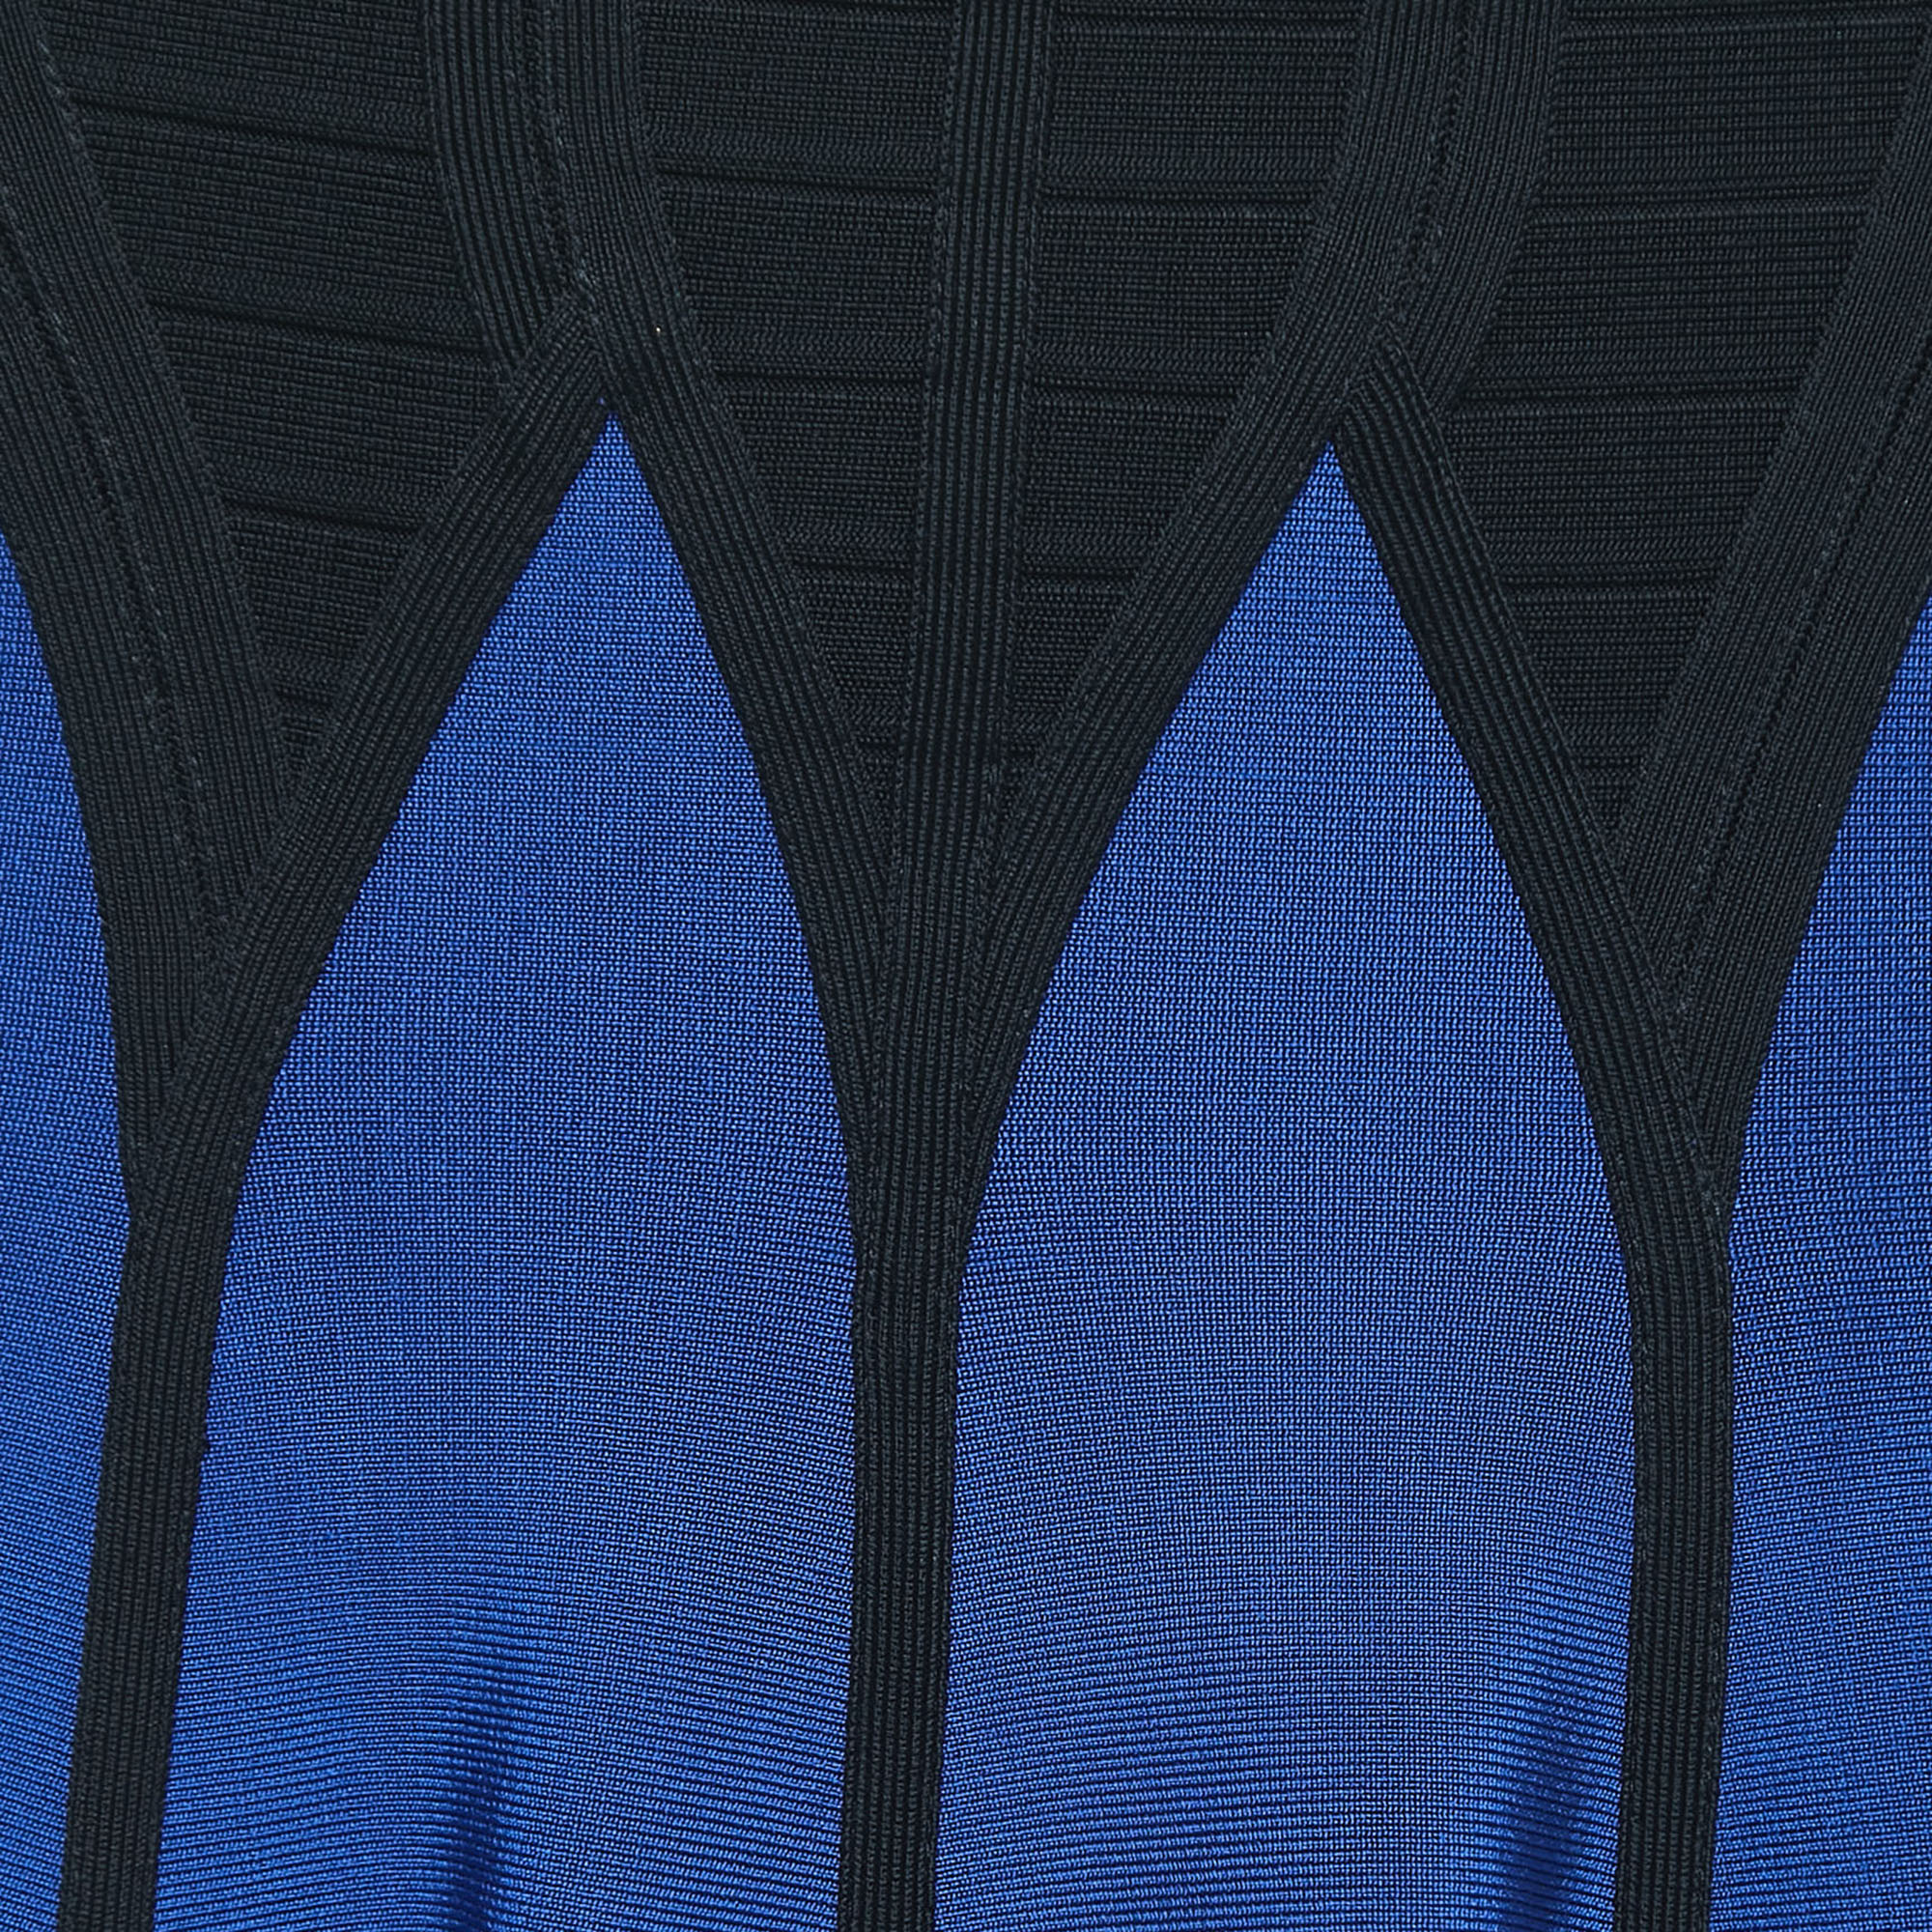 Herve Leger Black/Blue Knit Flared Mini Skirt S